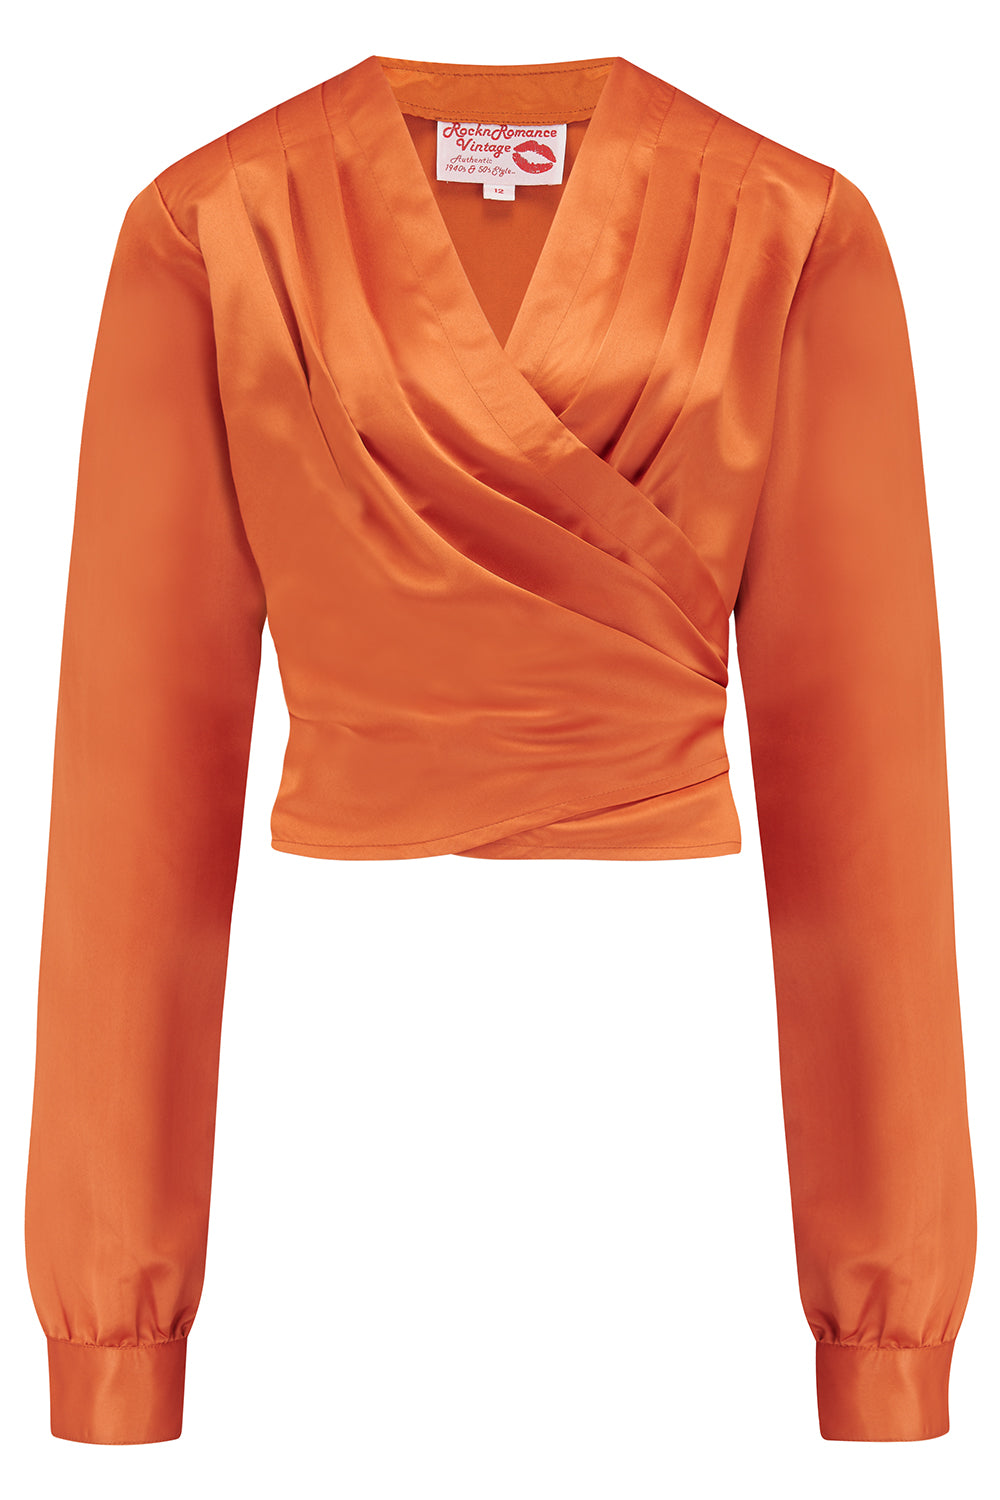 RnR "Luxe" Range.. The "Darla" Long Sleeve Wrap Blouse in Super Luxurious Burnt Orange SATIN